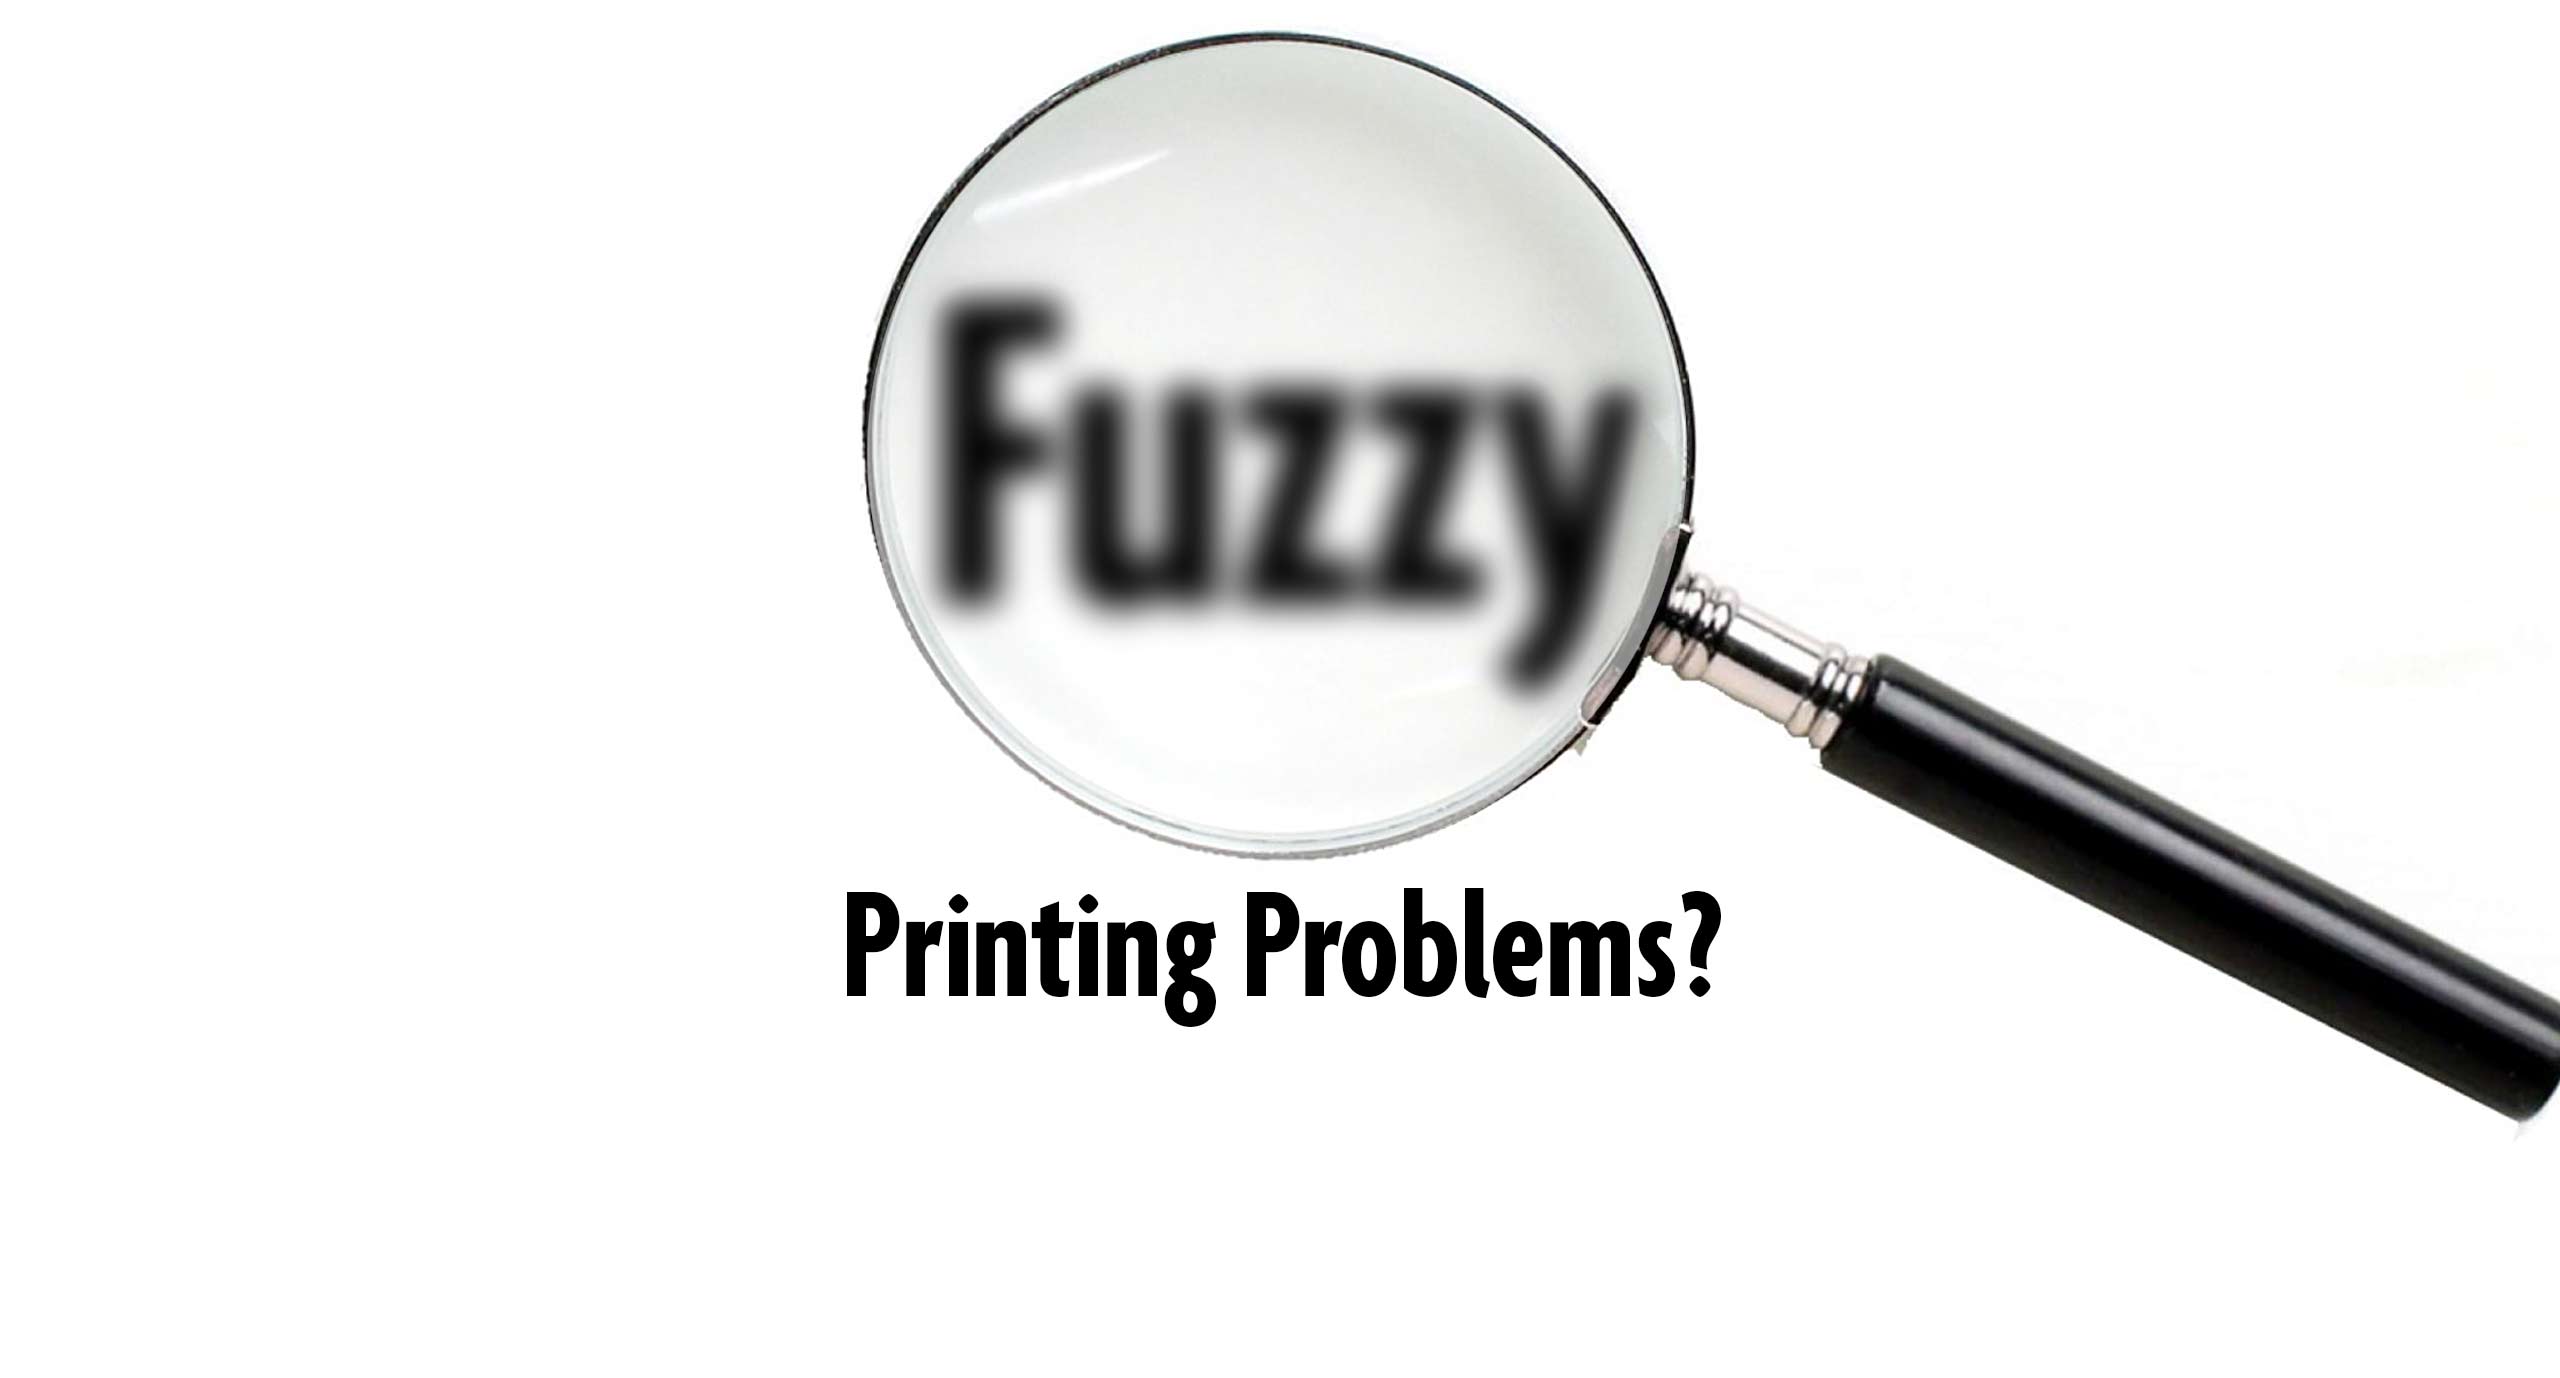 Fuzzy printing problems?